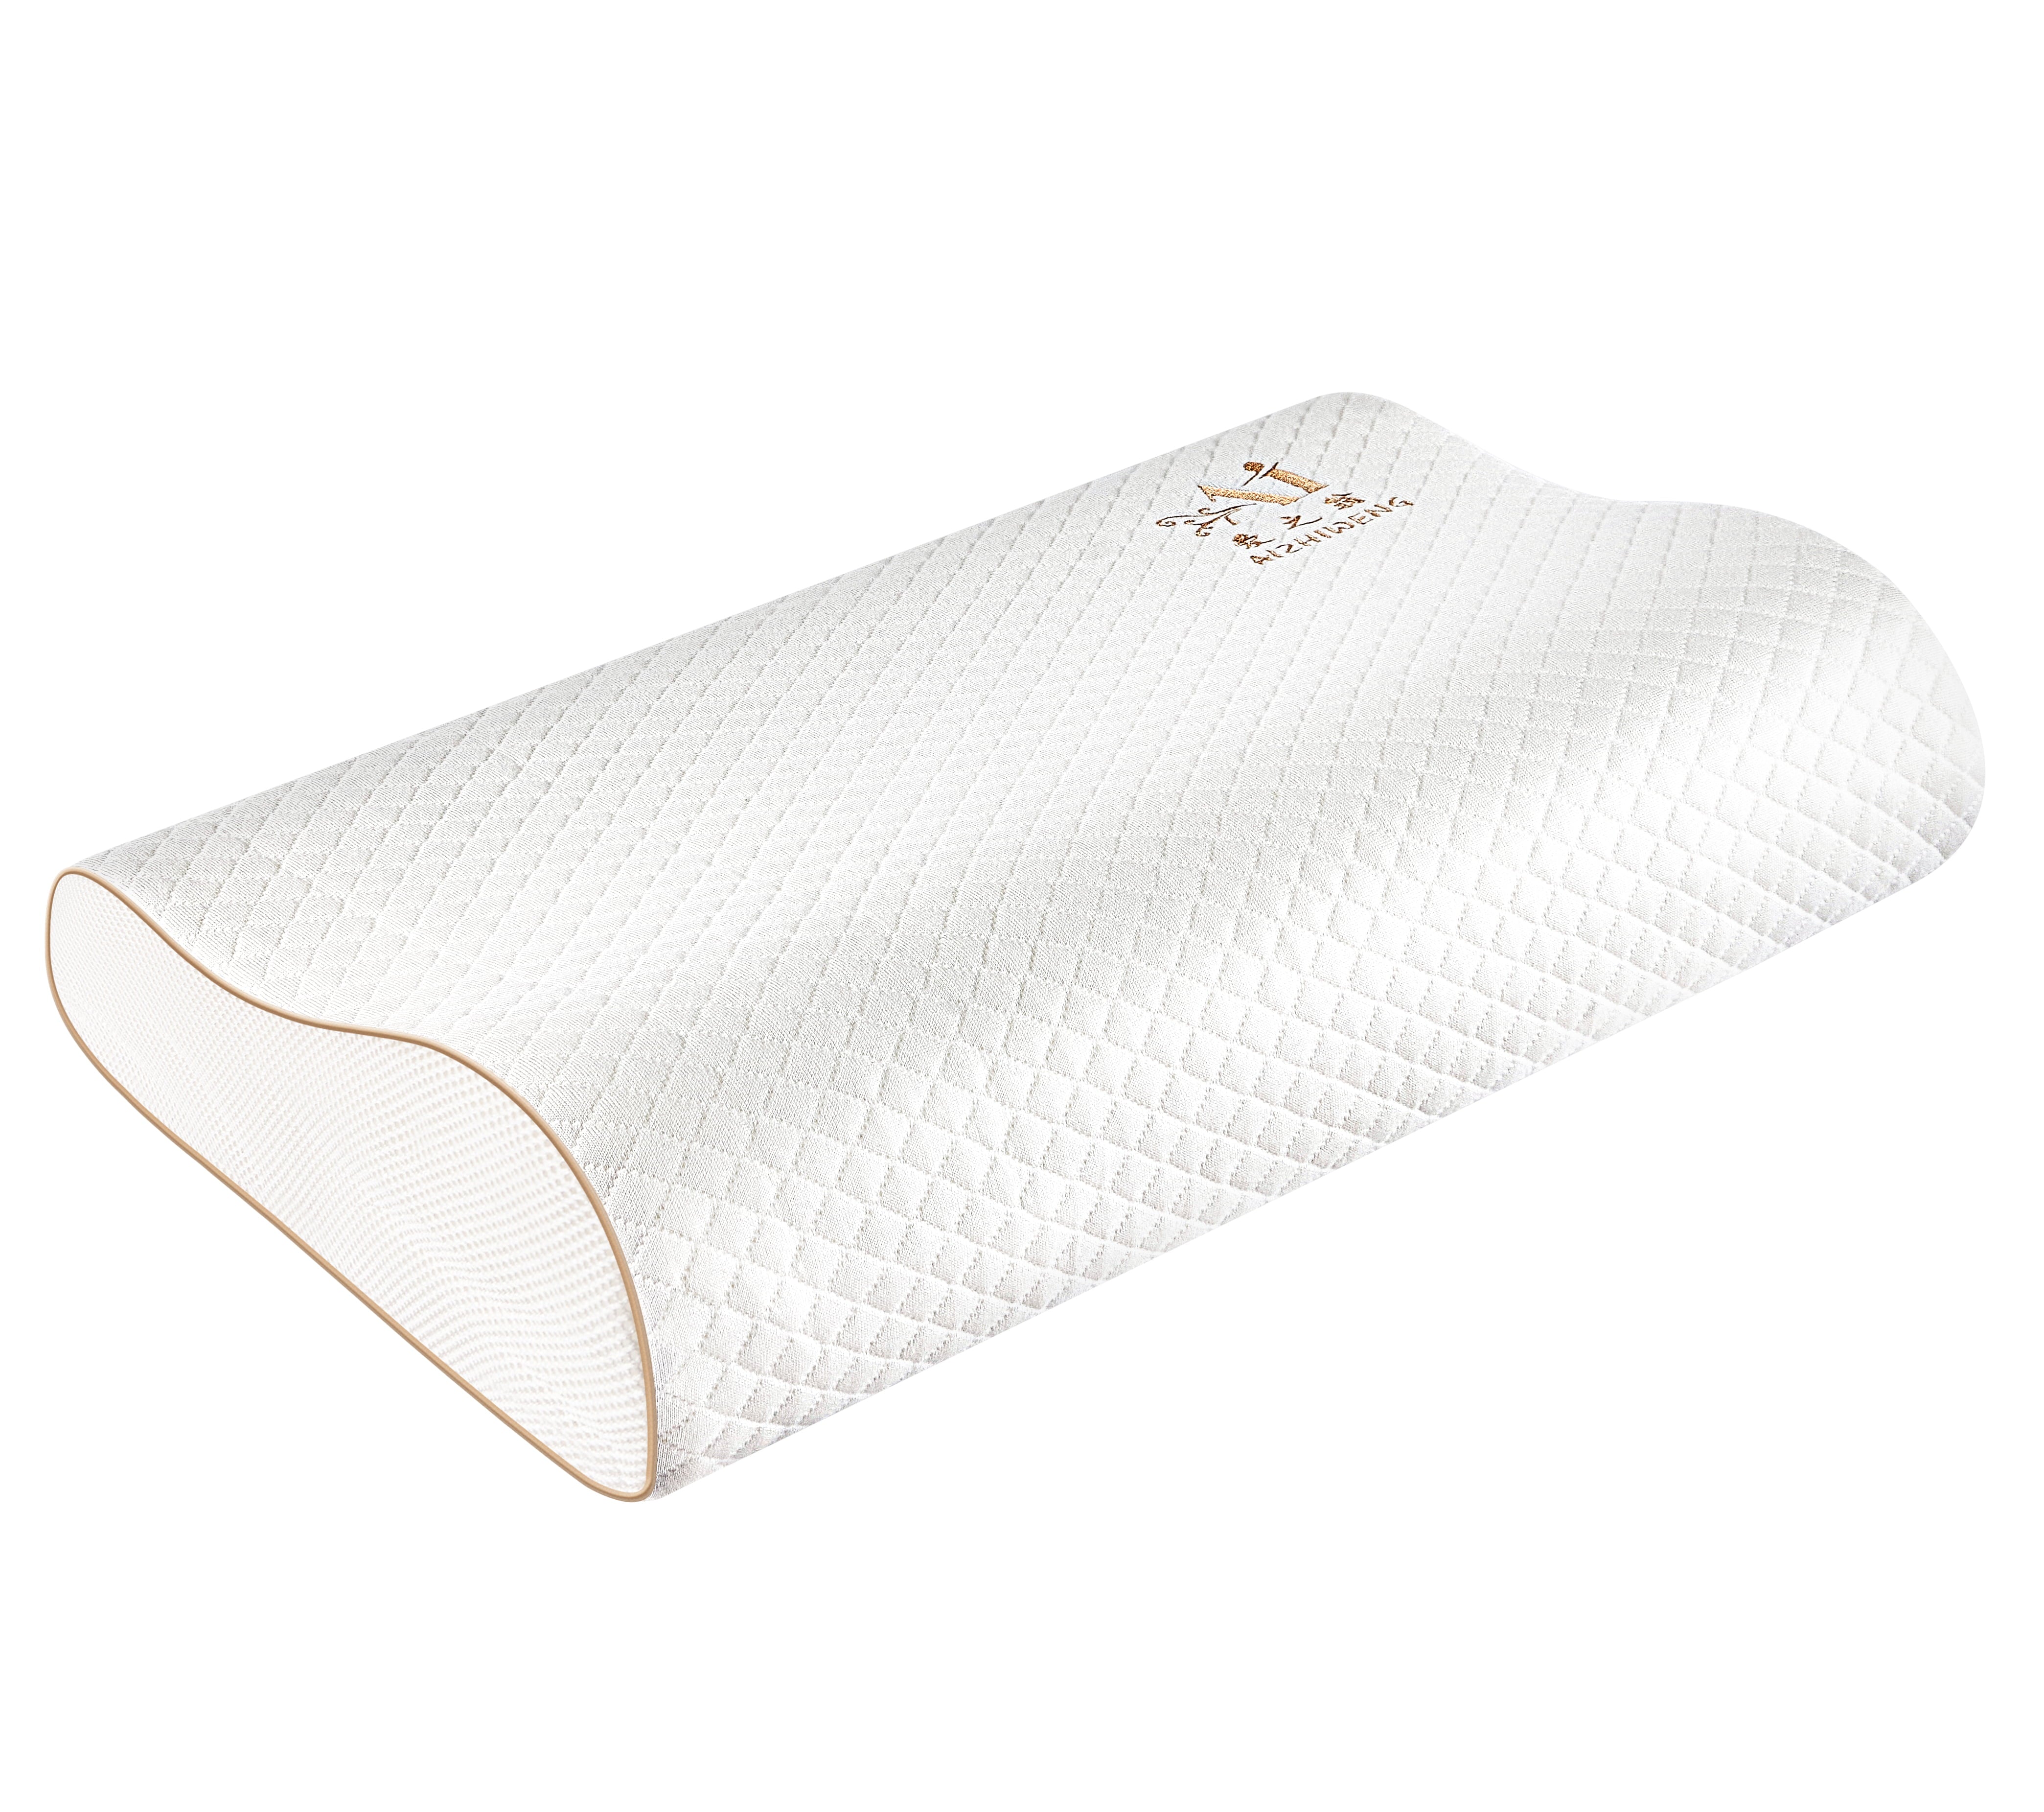 AIZHIWENG Memory Foam Pillow 50x30cm Slow Rebound Soft Memory Sleeping Pillow Ladies pillow